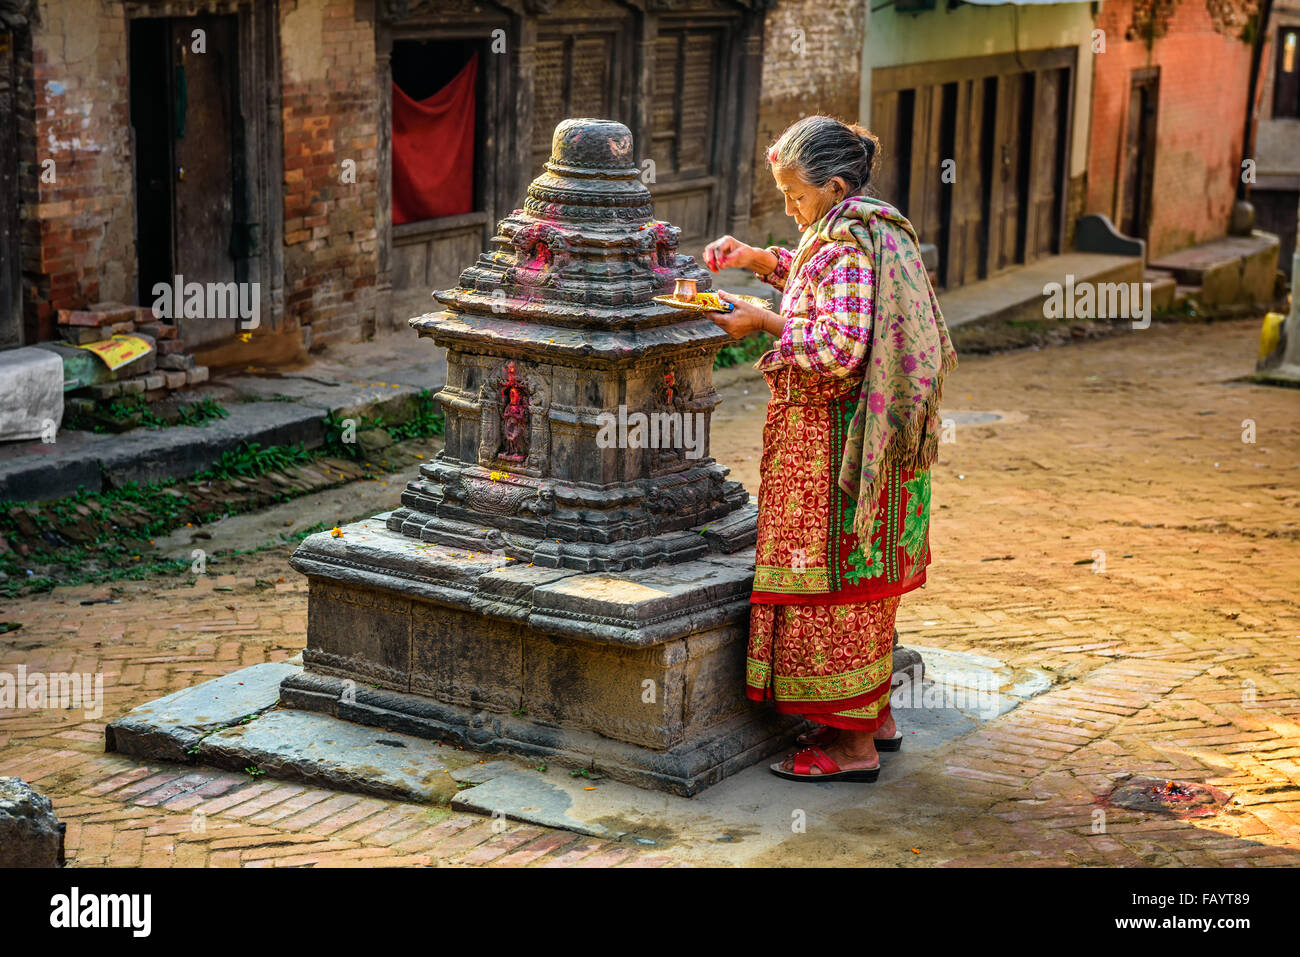 Vecchia donna accendere una candela prima di preghiera in strada di Kathmandu Foto Stock